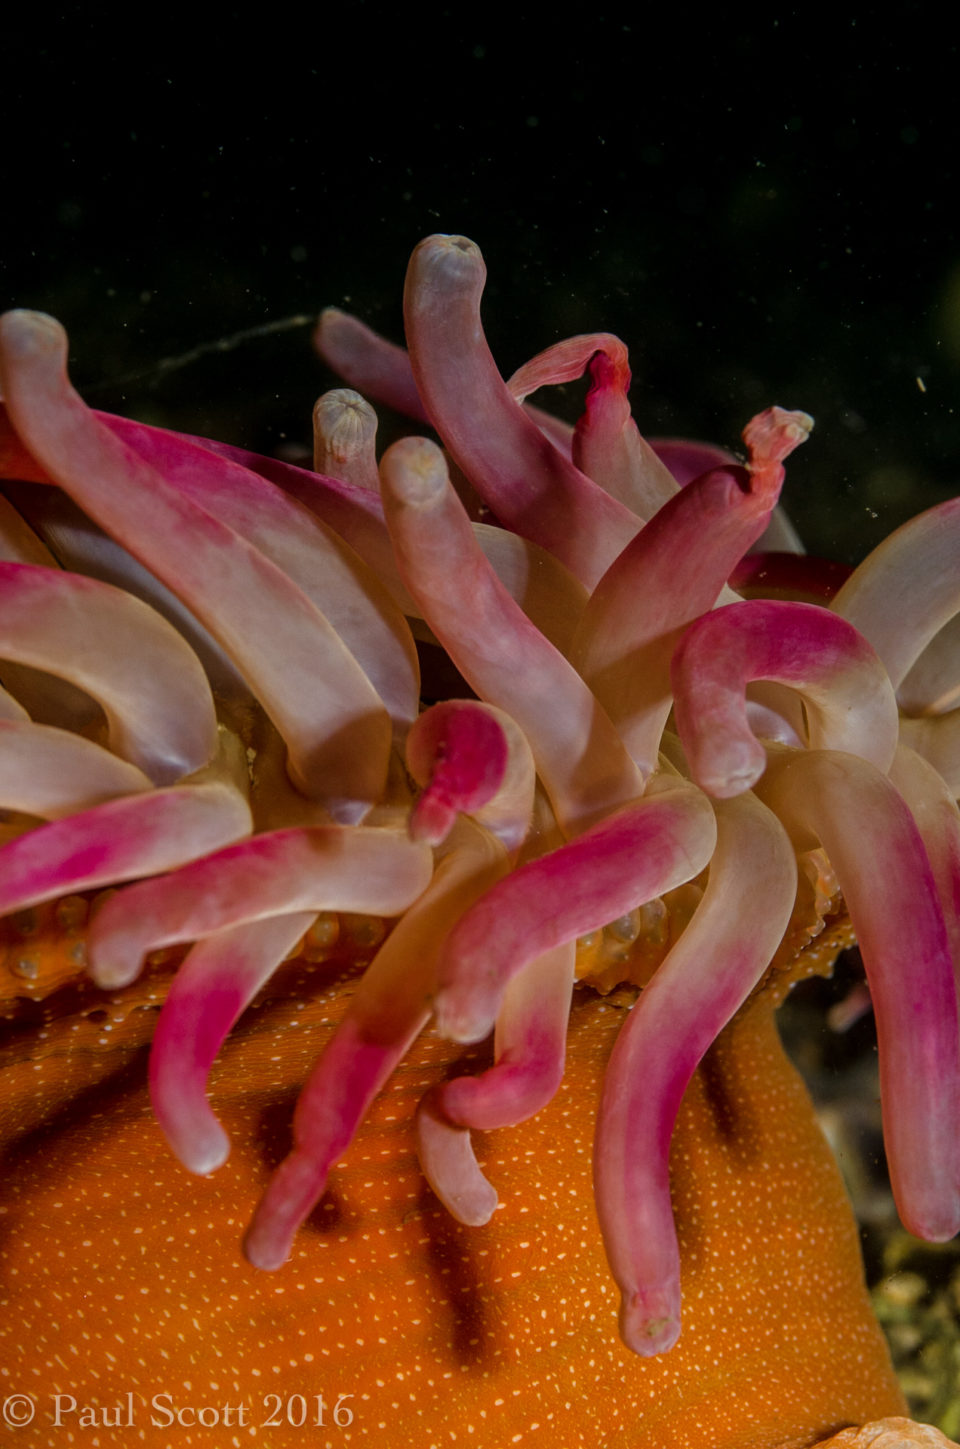 Horseman anemone, Urticina eques